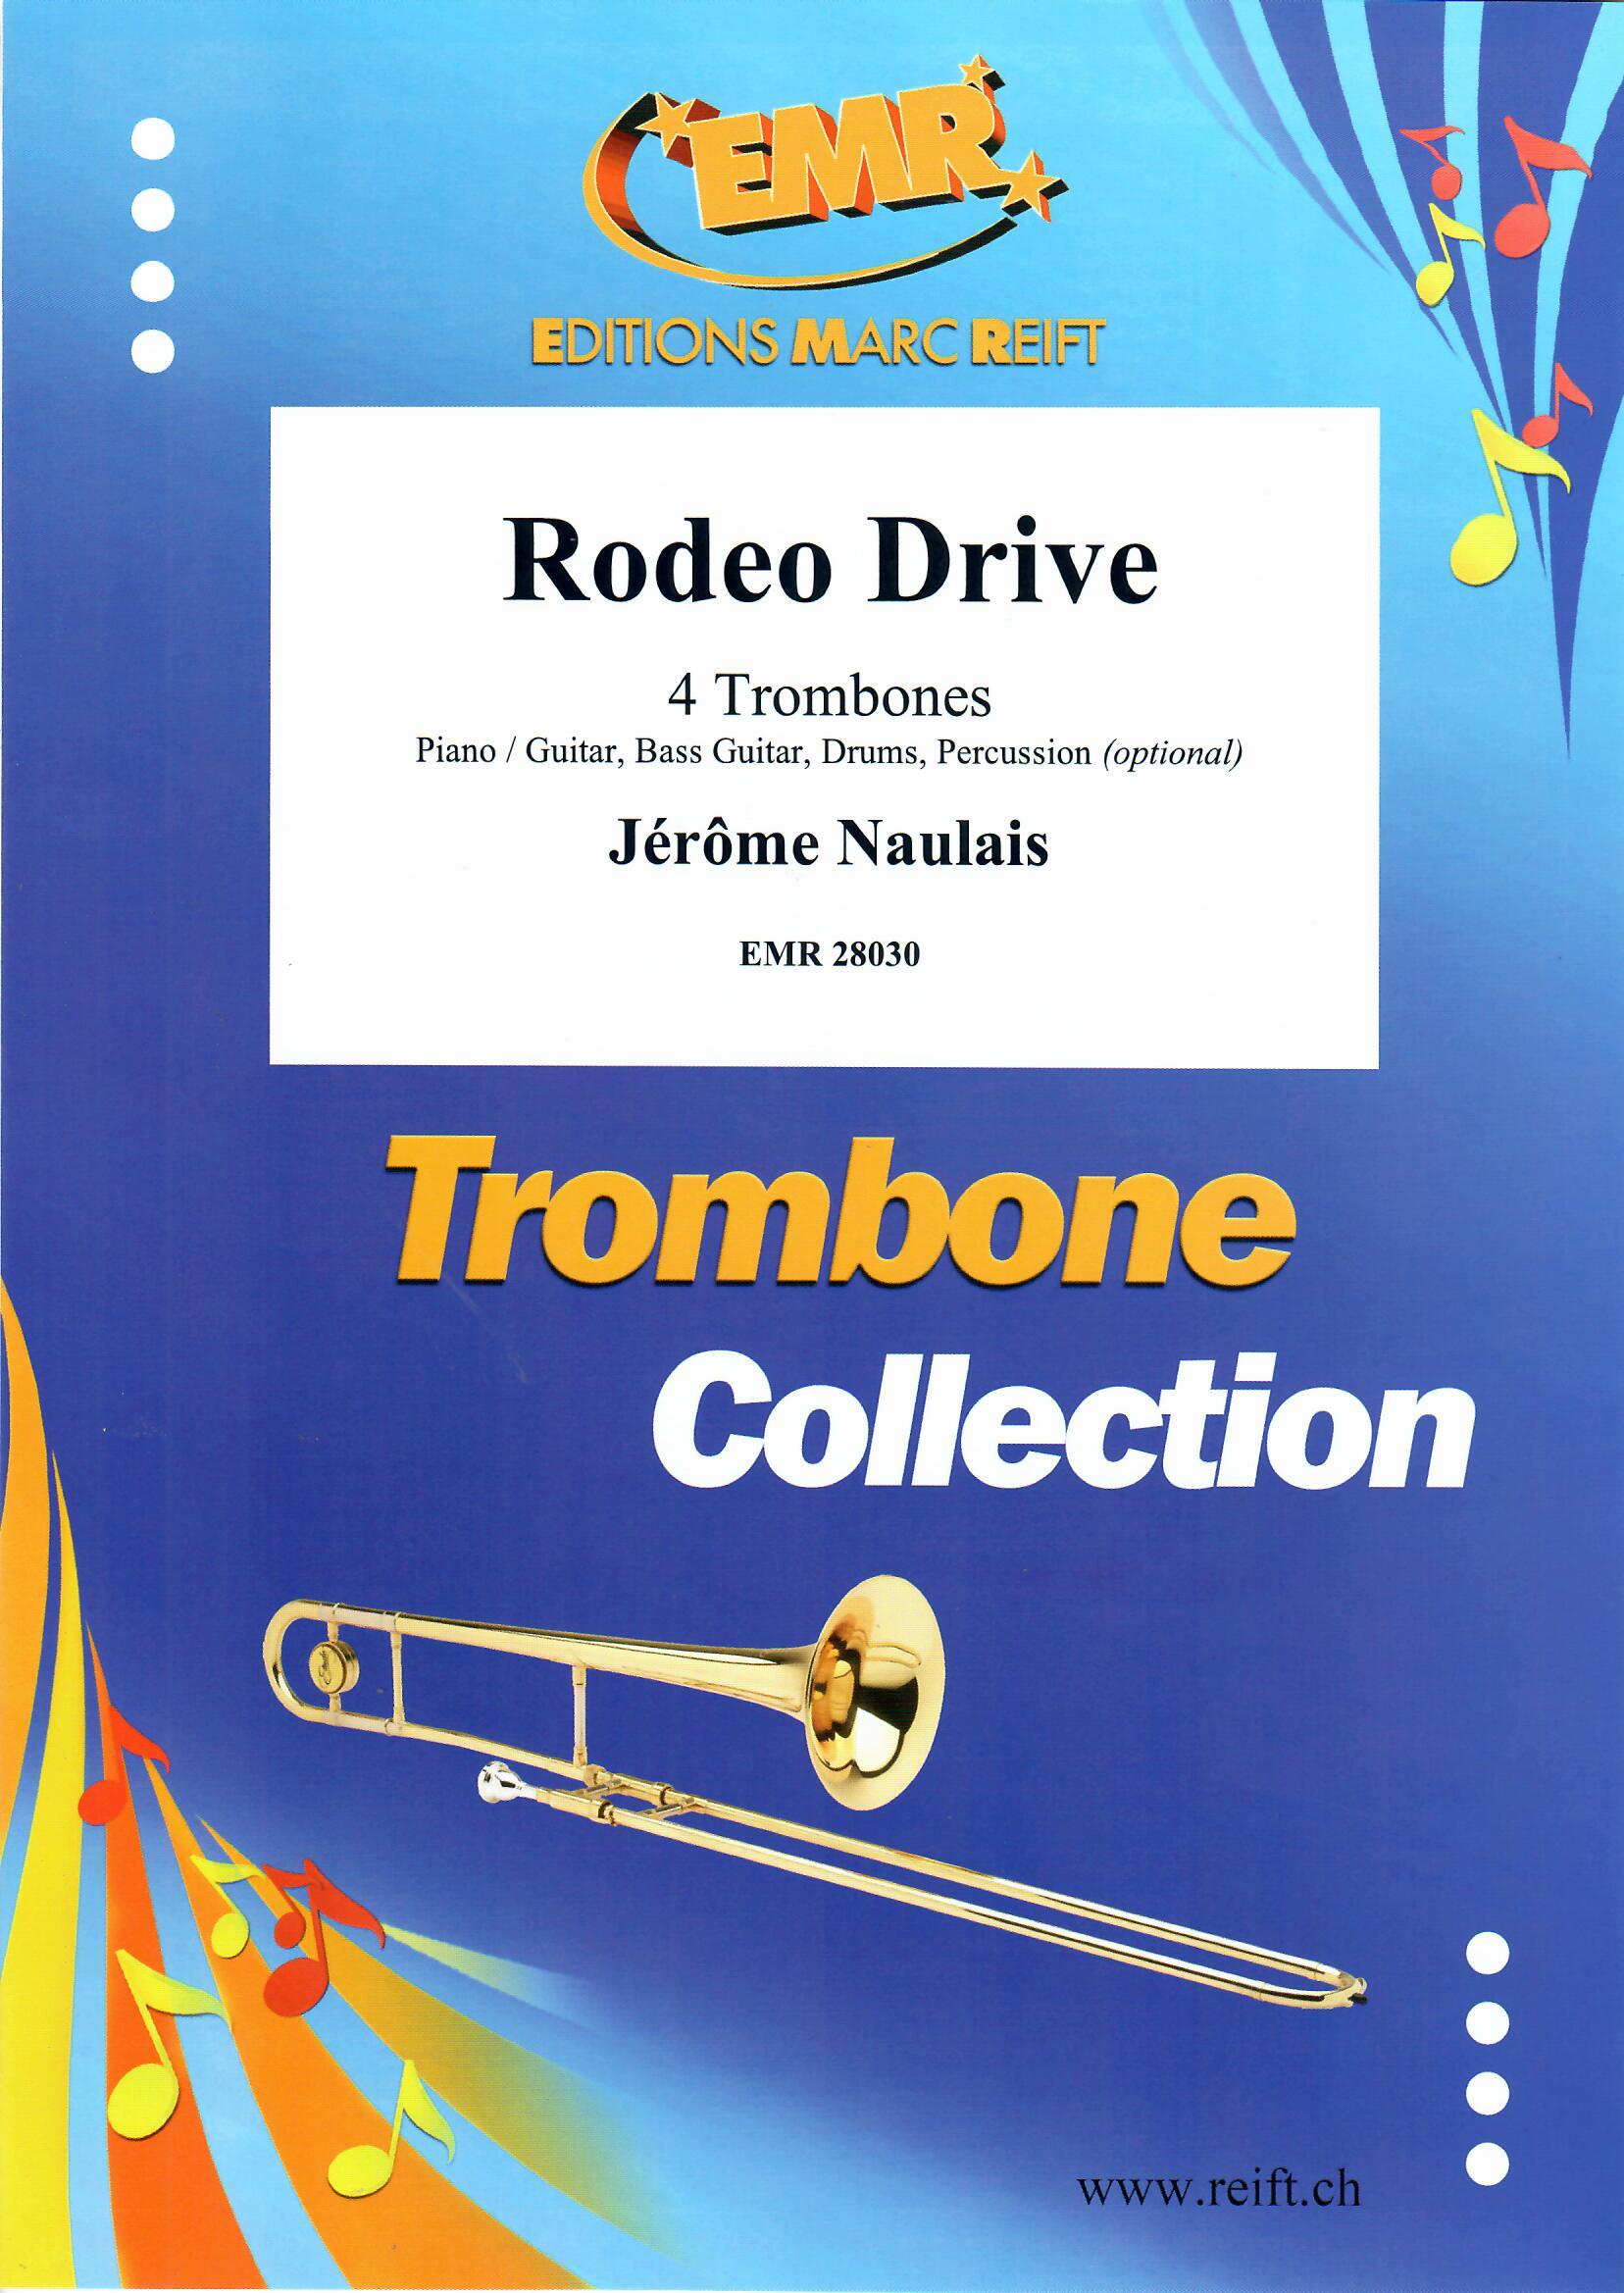 RODEO DRIVE, NEW & RECENT Publications, EMR Brass Quartets